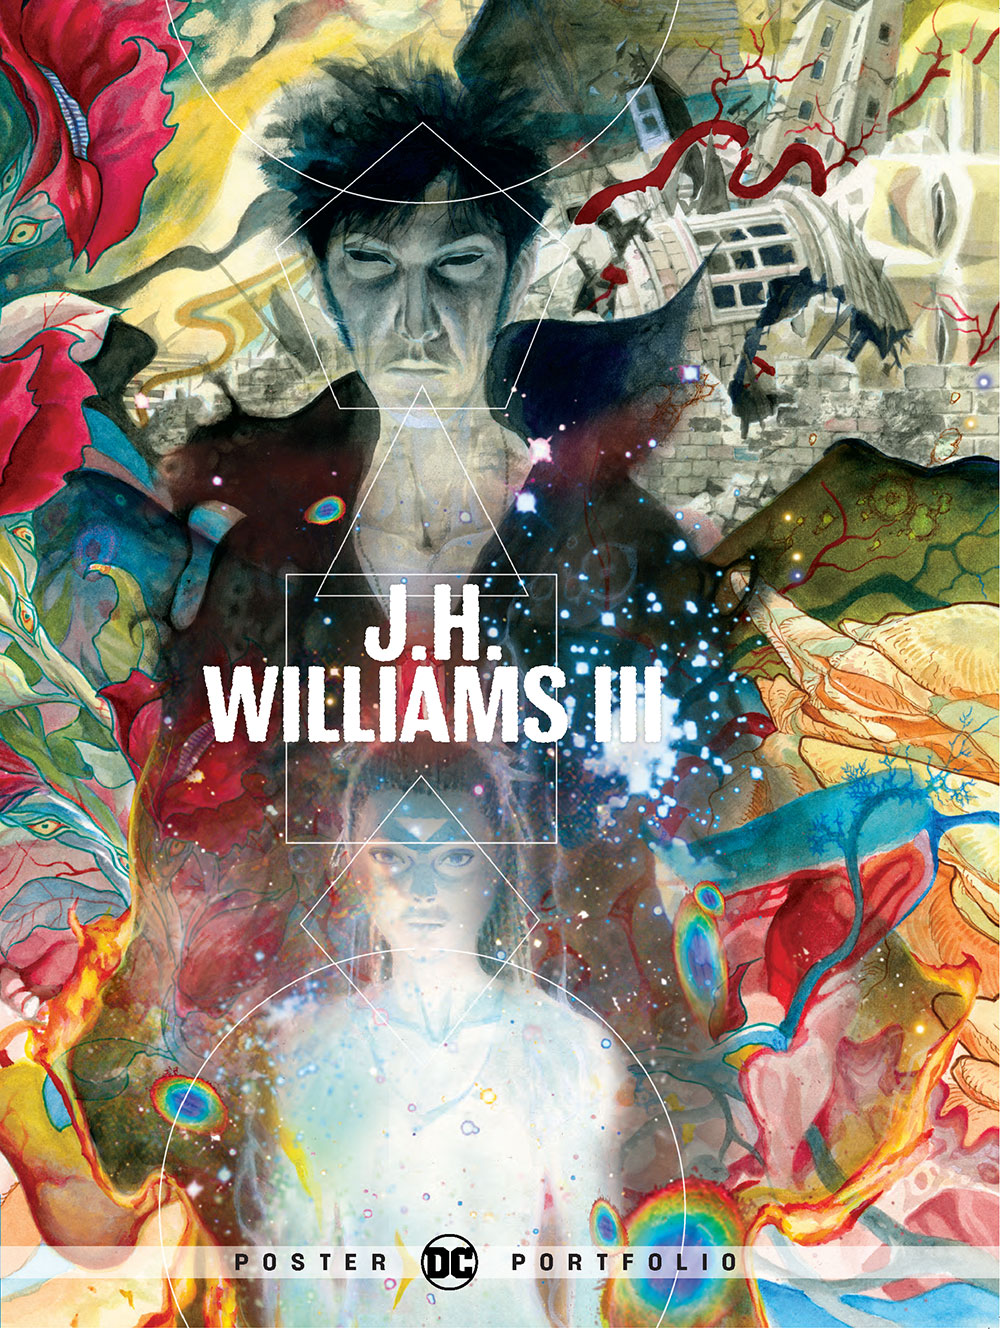 DC Poster Portfolio Volume 19 J.H. Williams III